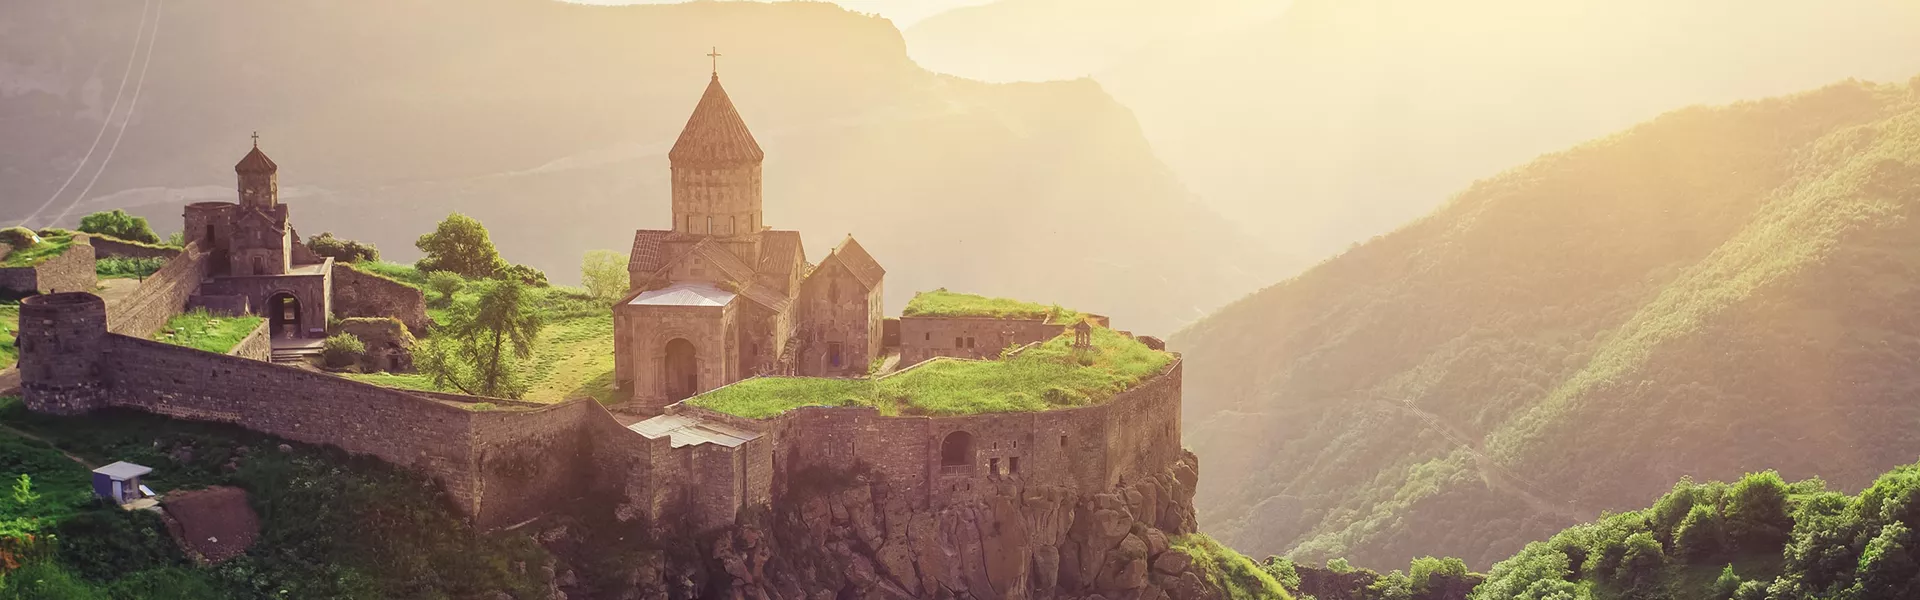 The Tatev Monastery, Armenia